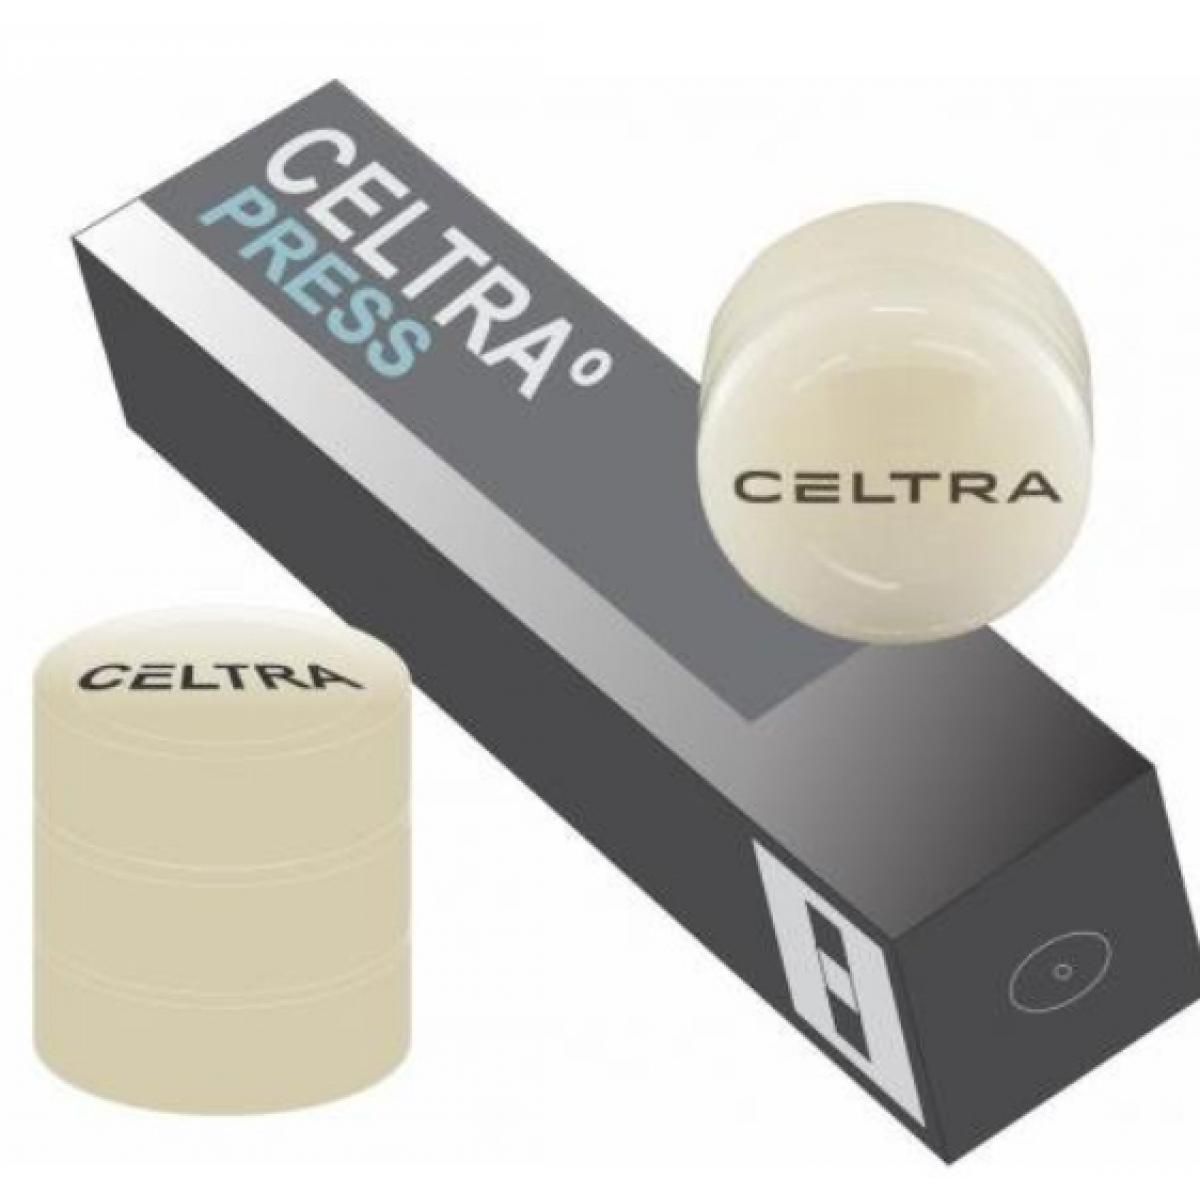 CELTRA PRESS MT A3 3 X 6 GR DENTSPLY -